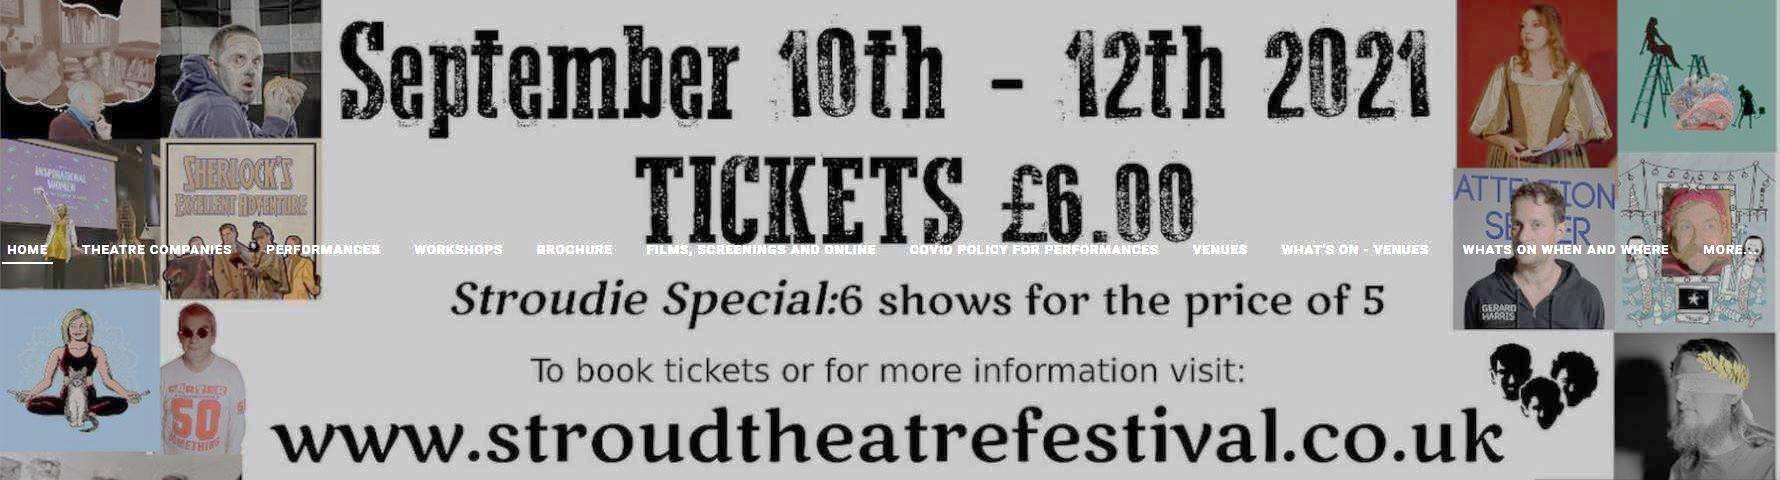 Stroud Theatre Festival 2021 web poster - enlarge